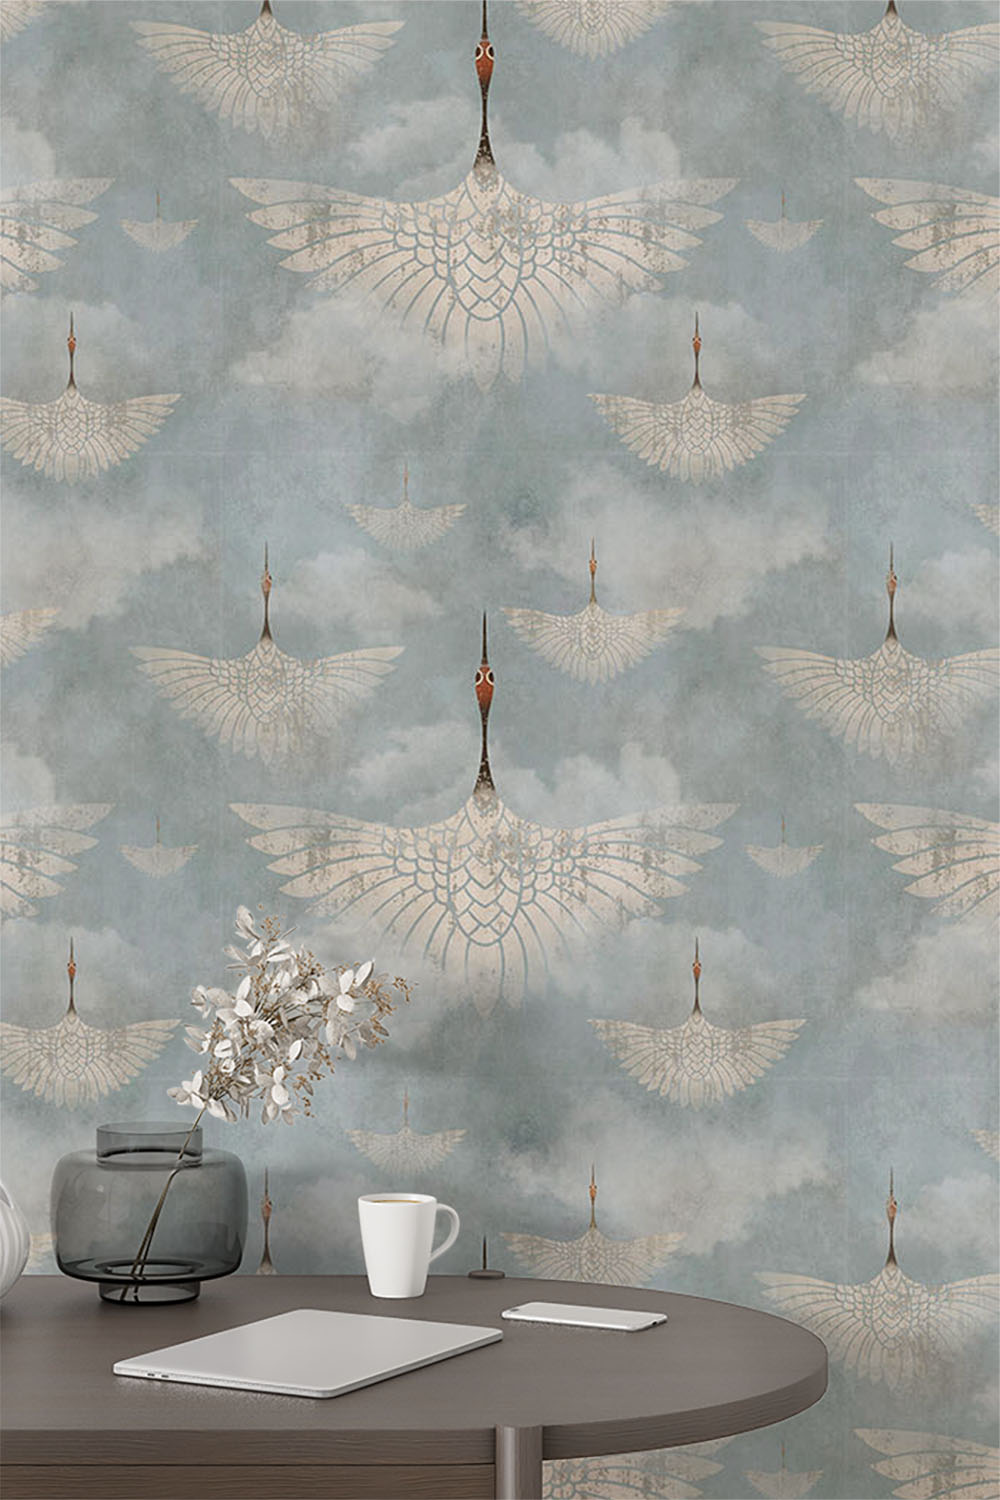 cranes-flying-in-clouds-blue-sky-wallpaper-sample